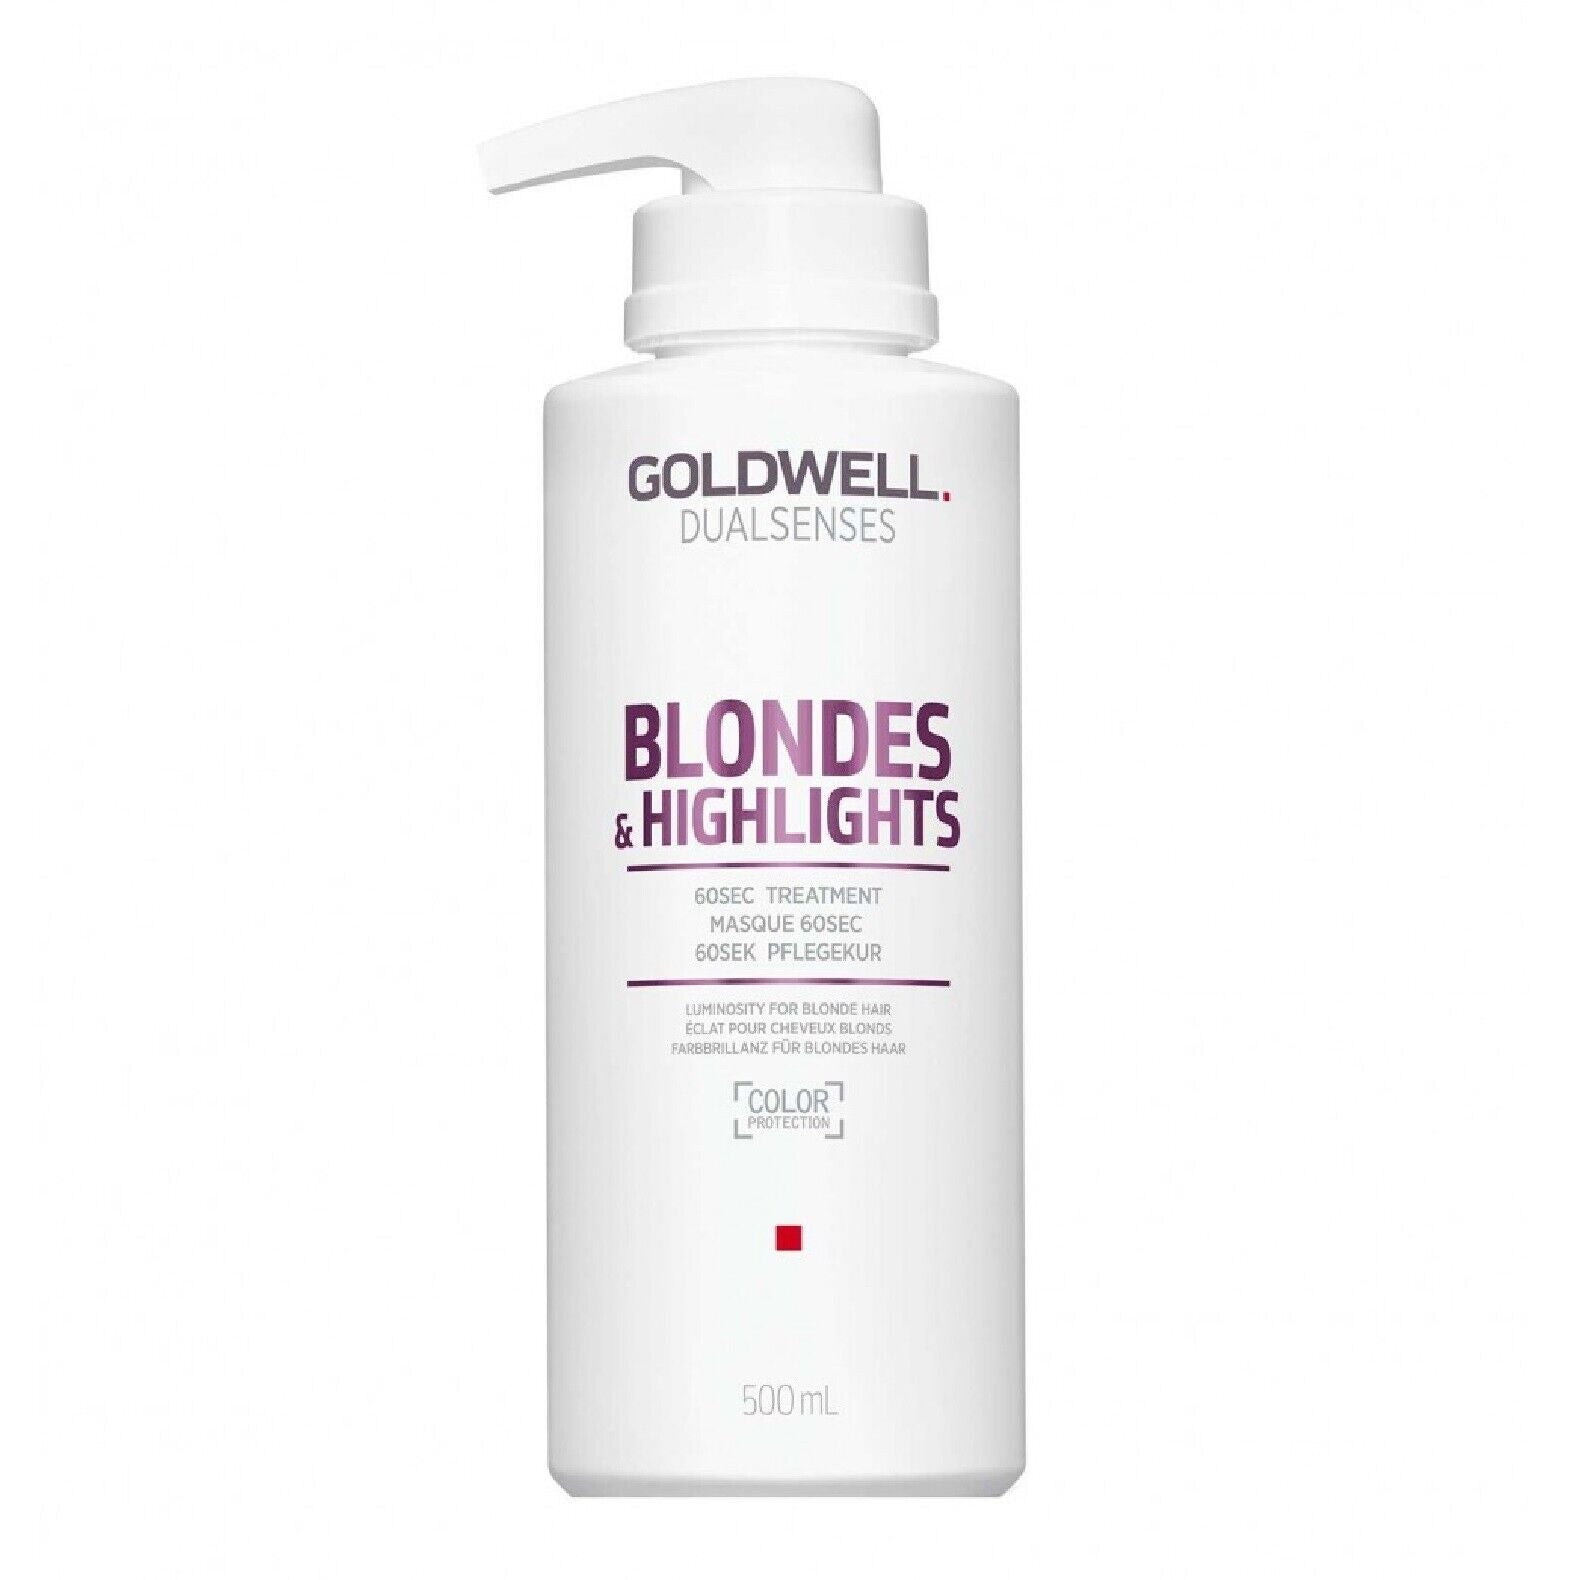 Goldwell Dualsenses | Blondes & Highlights 60Sec Treatment 500ml